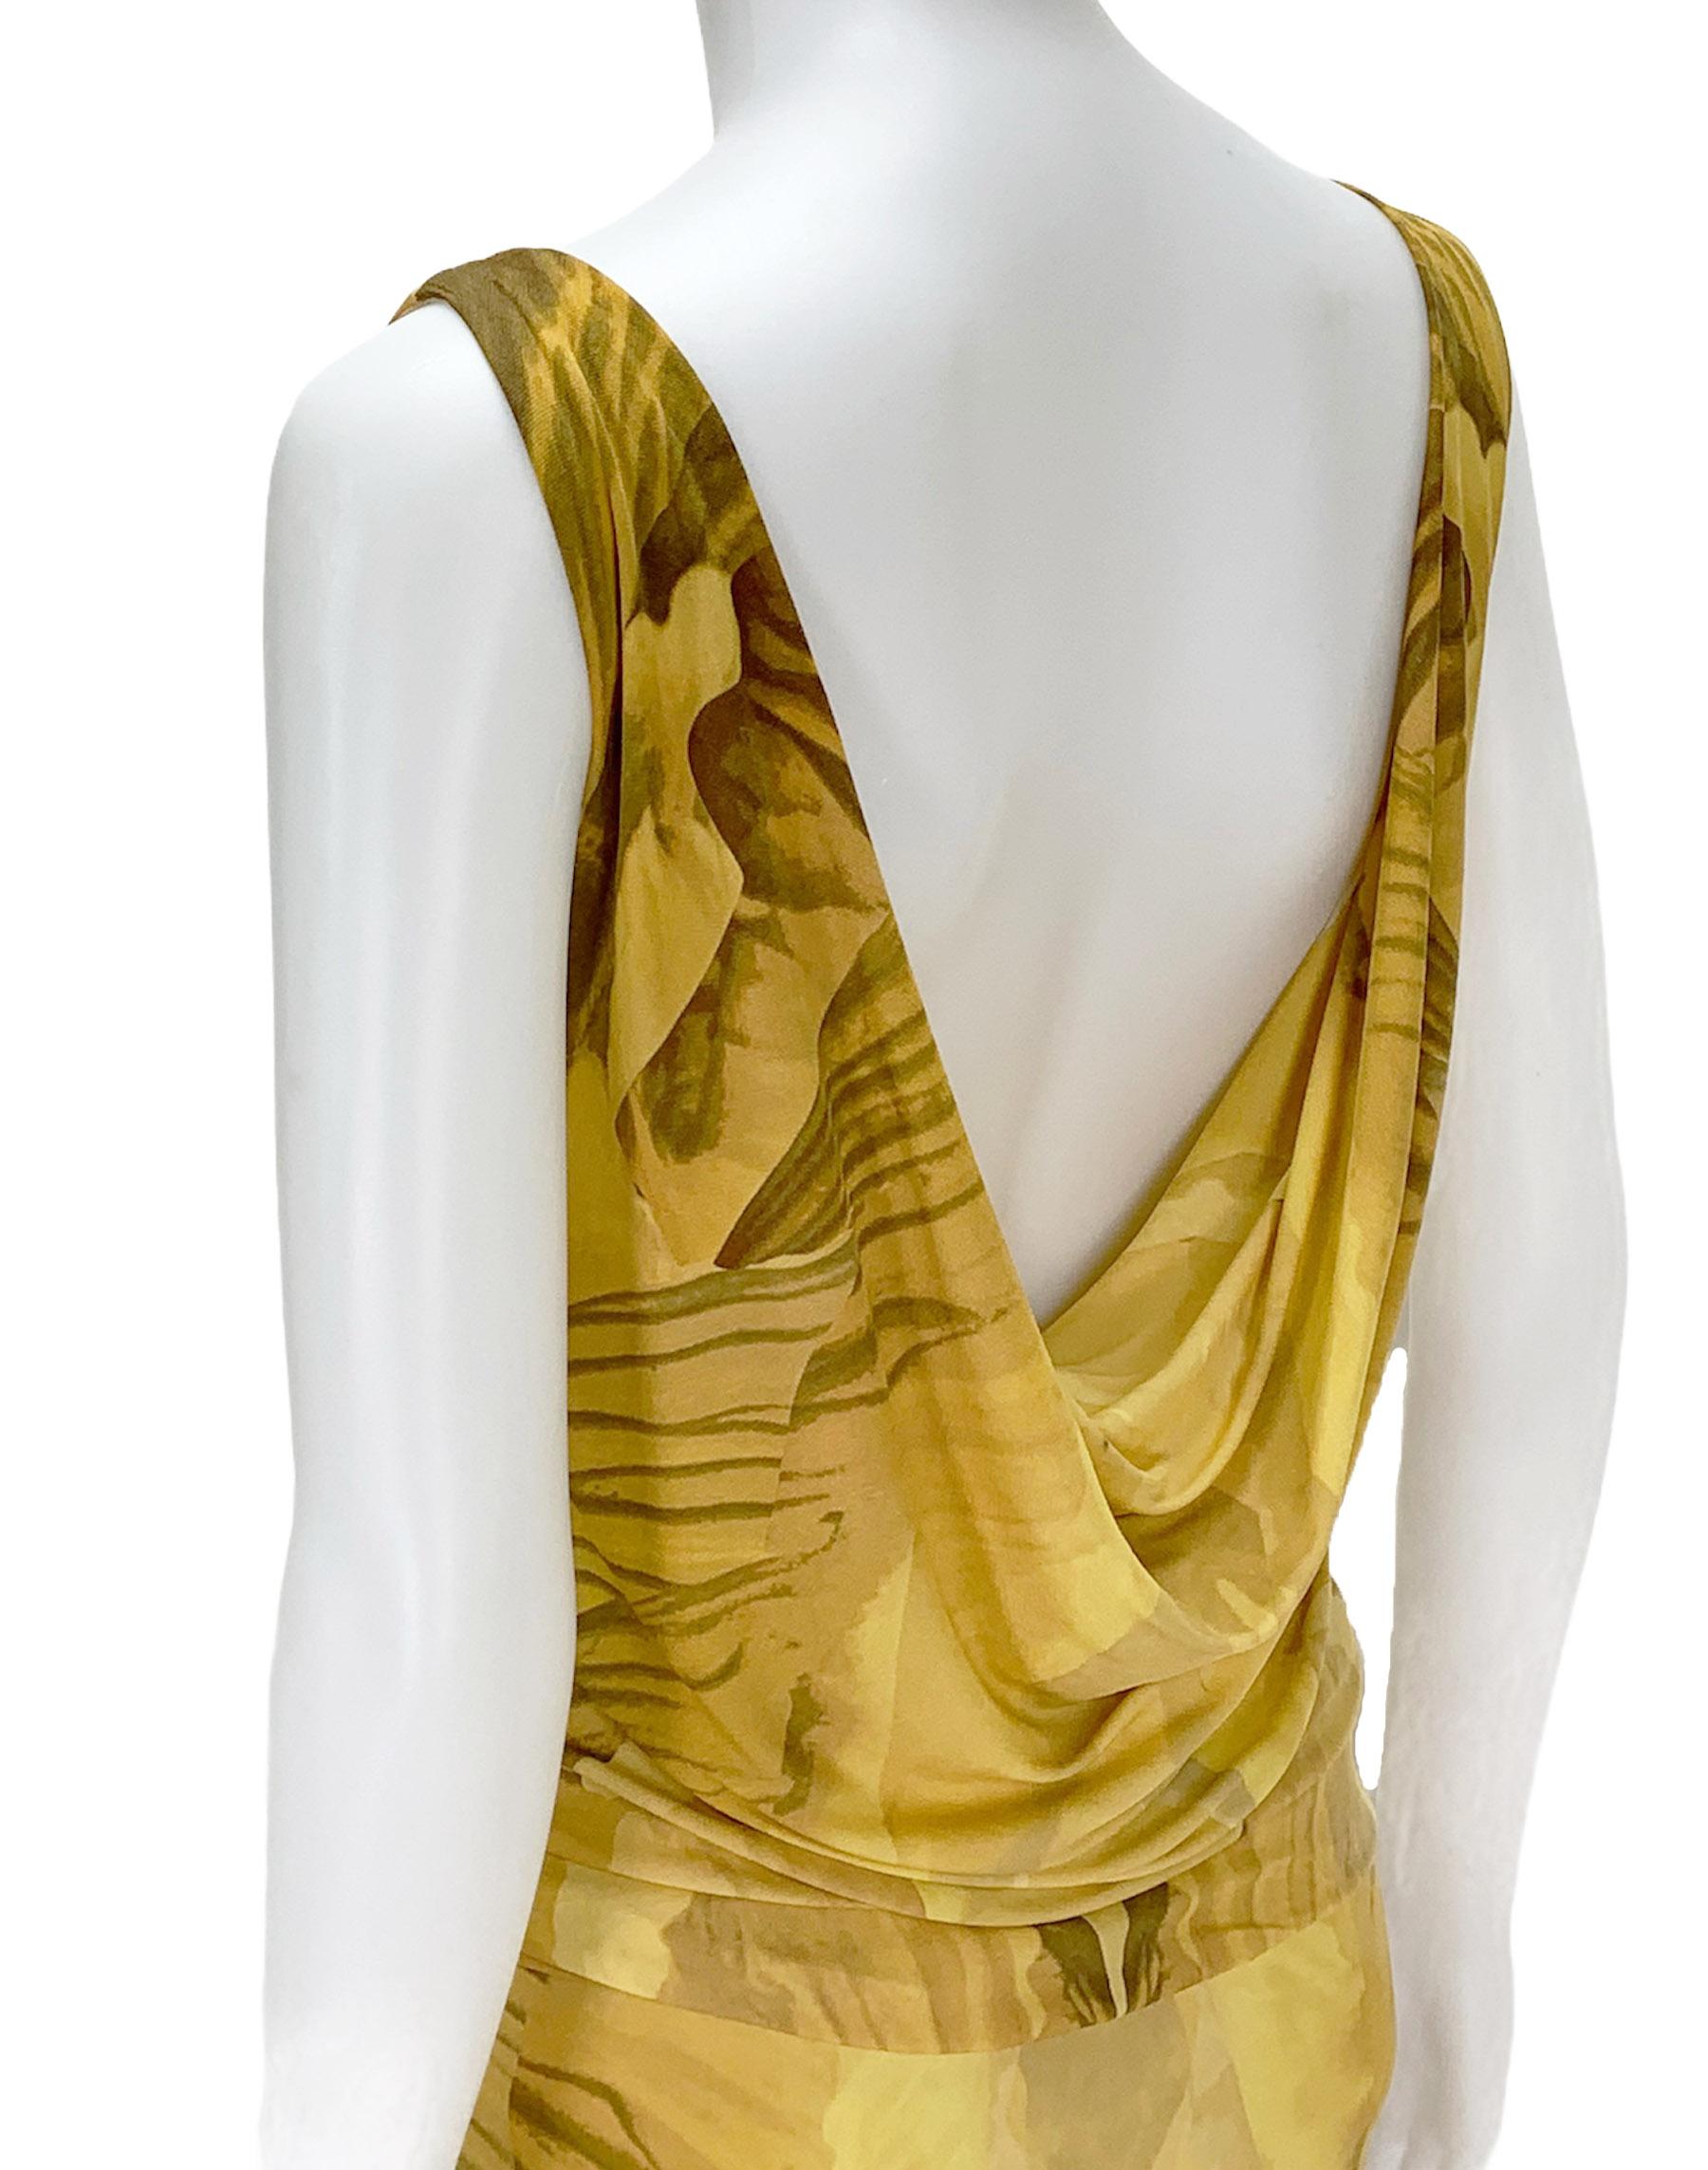 Alexander McQueen - Robe dos nu extensible, collection Plato's Atlantis, printemps-été 2010, taille 40 Pour femmes en vente